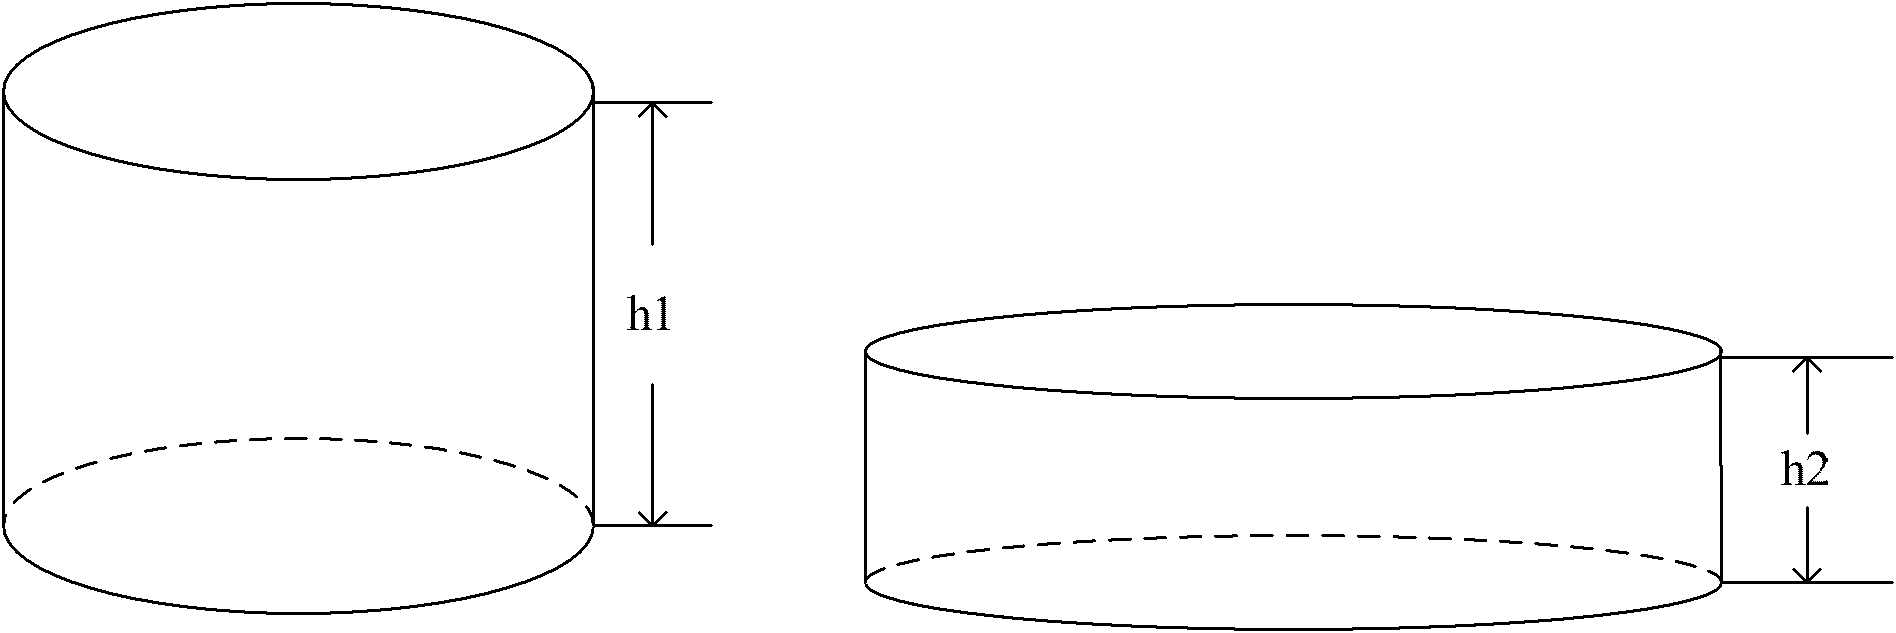 Method for preparing anode made of copper-phosphorus alloy